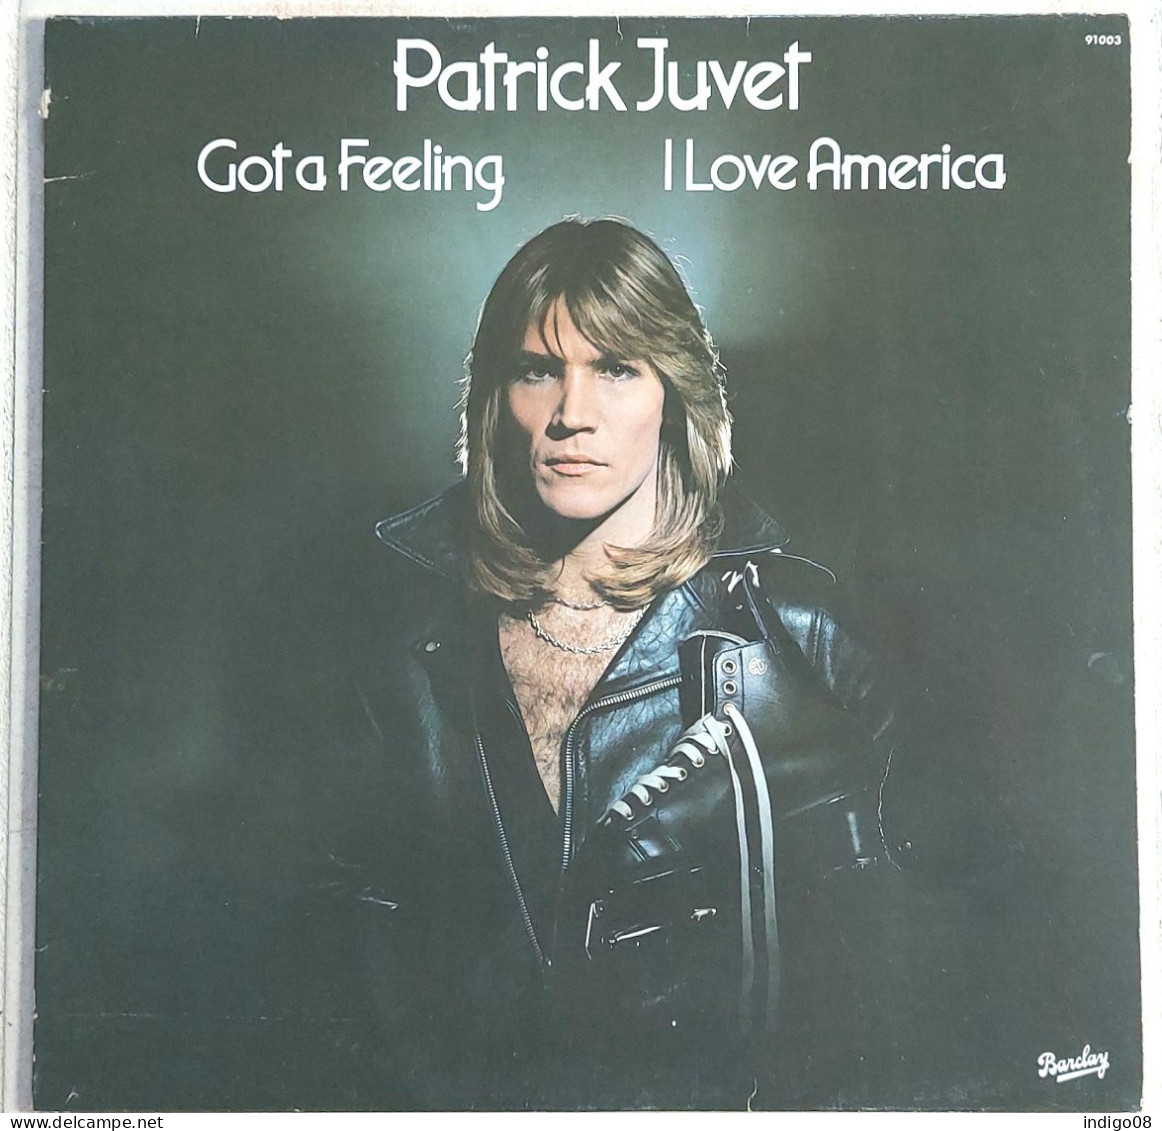 LP 33 Tours LP 33 Tours Patrick Juvet – Got A Feeling - I Love America - Disco & Pop